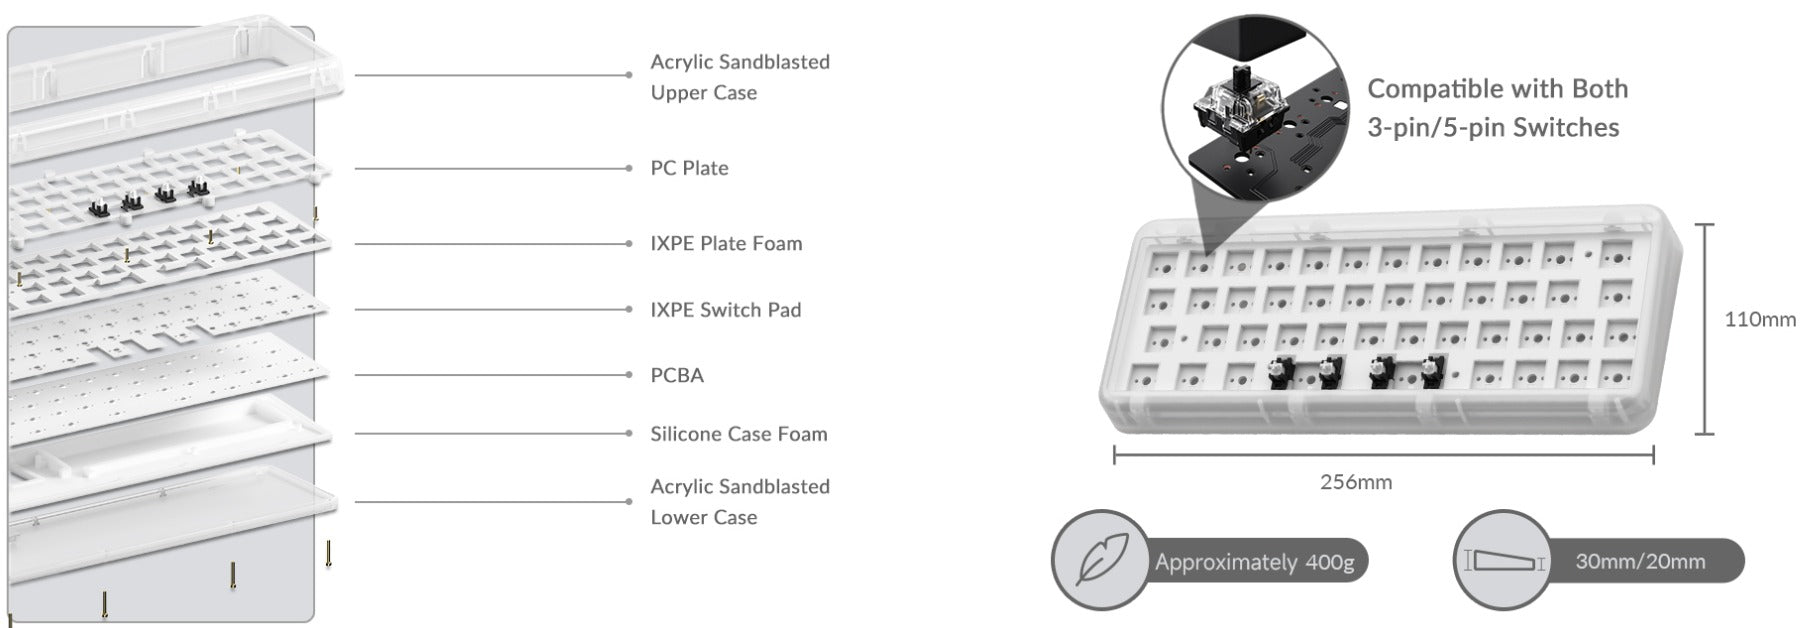 Akko ACR Top 40 Barebone Custom Hot-Swappable Mechanical Keyboard